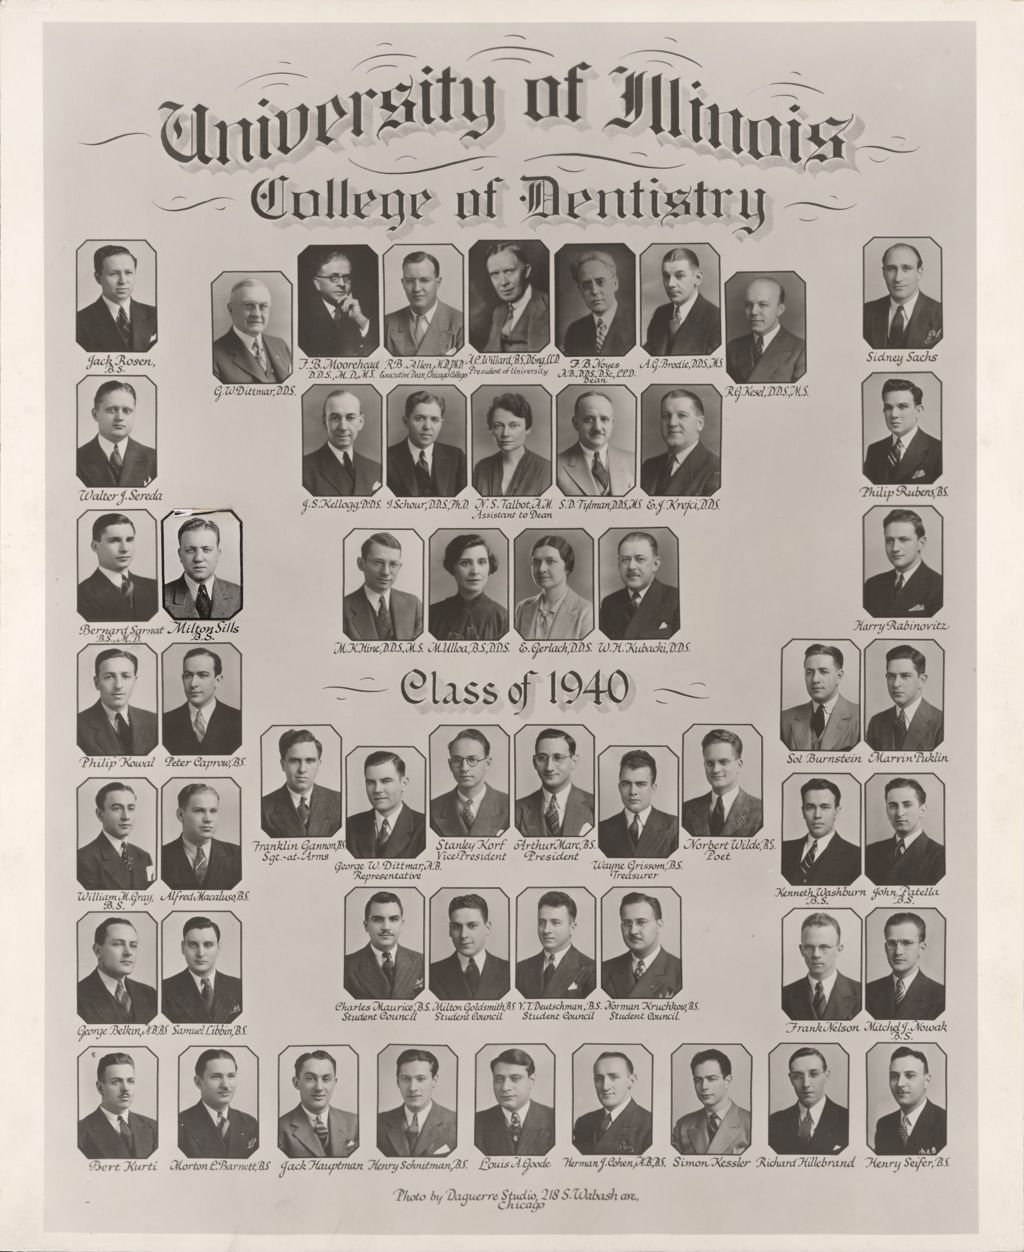 1940 graduating class, University of Illinois College of Dentistry